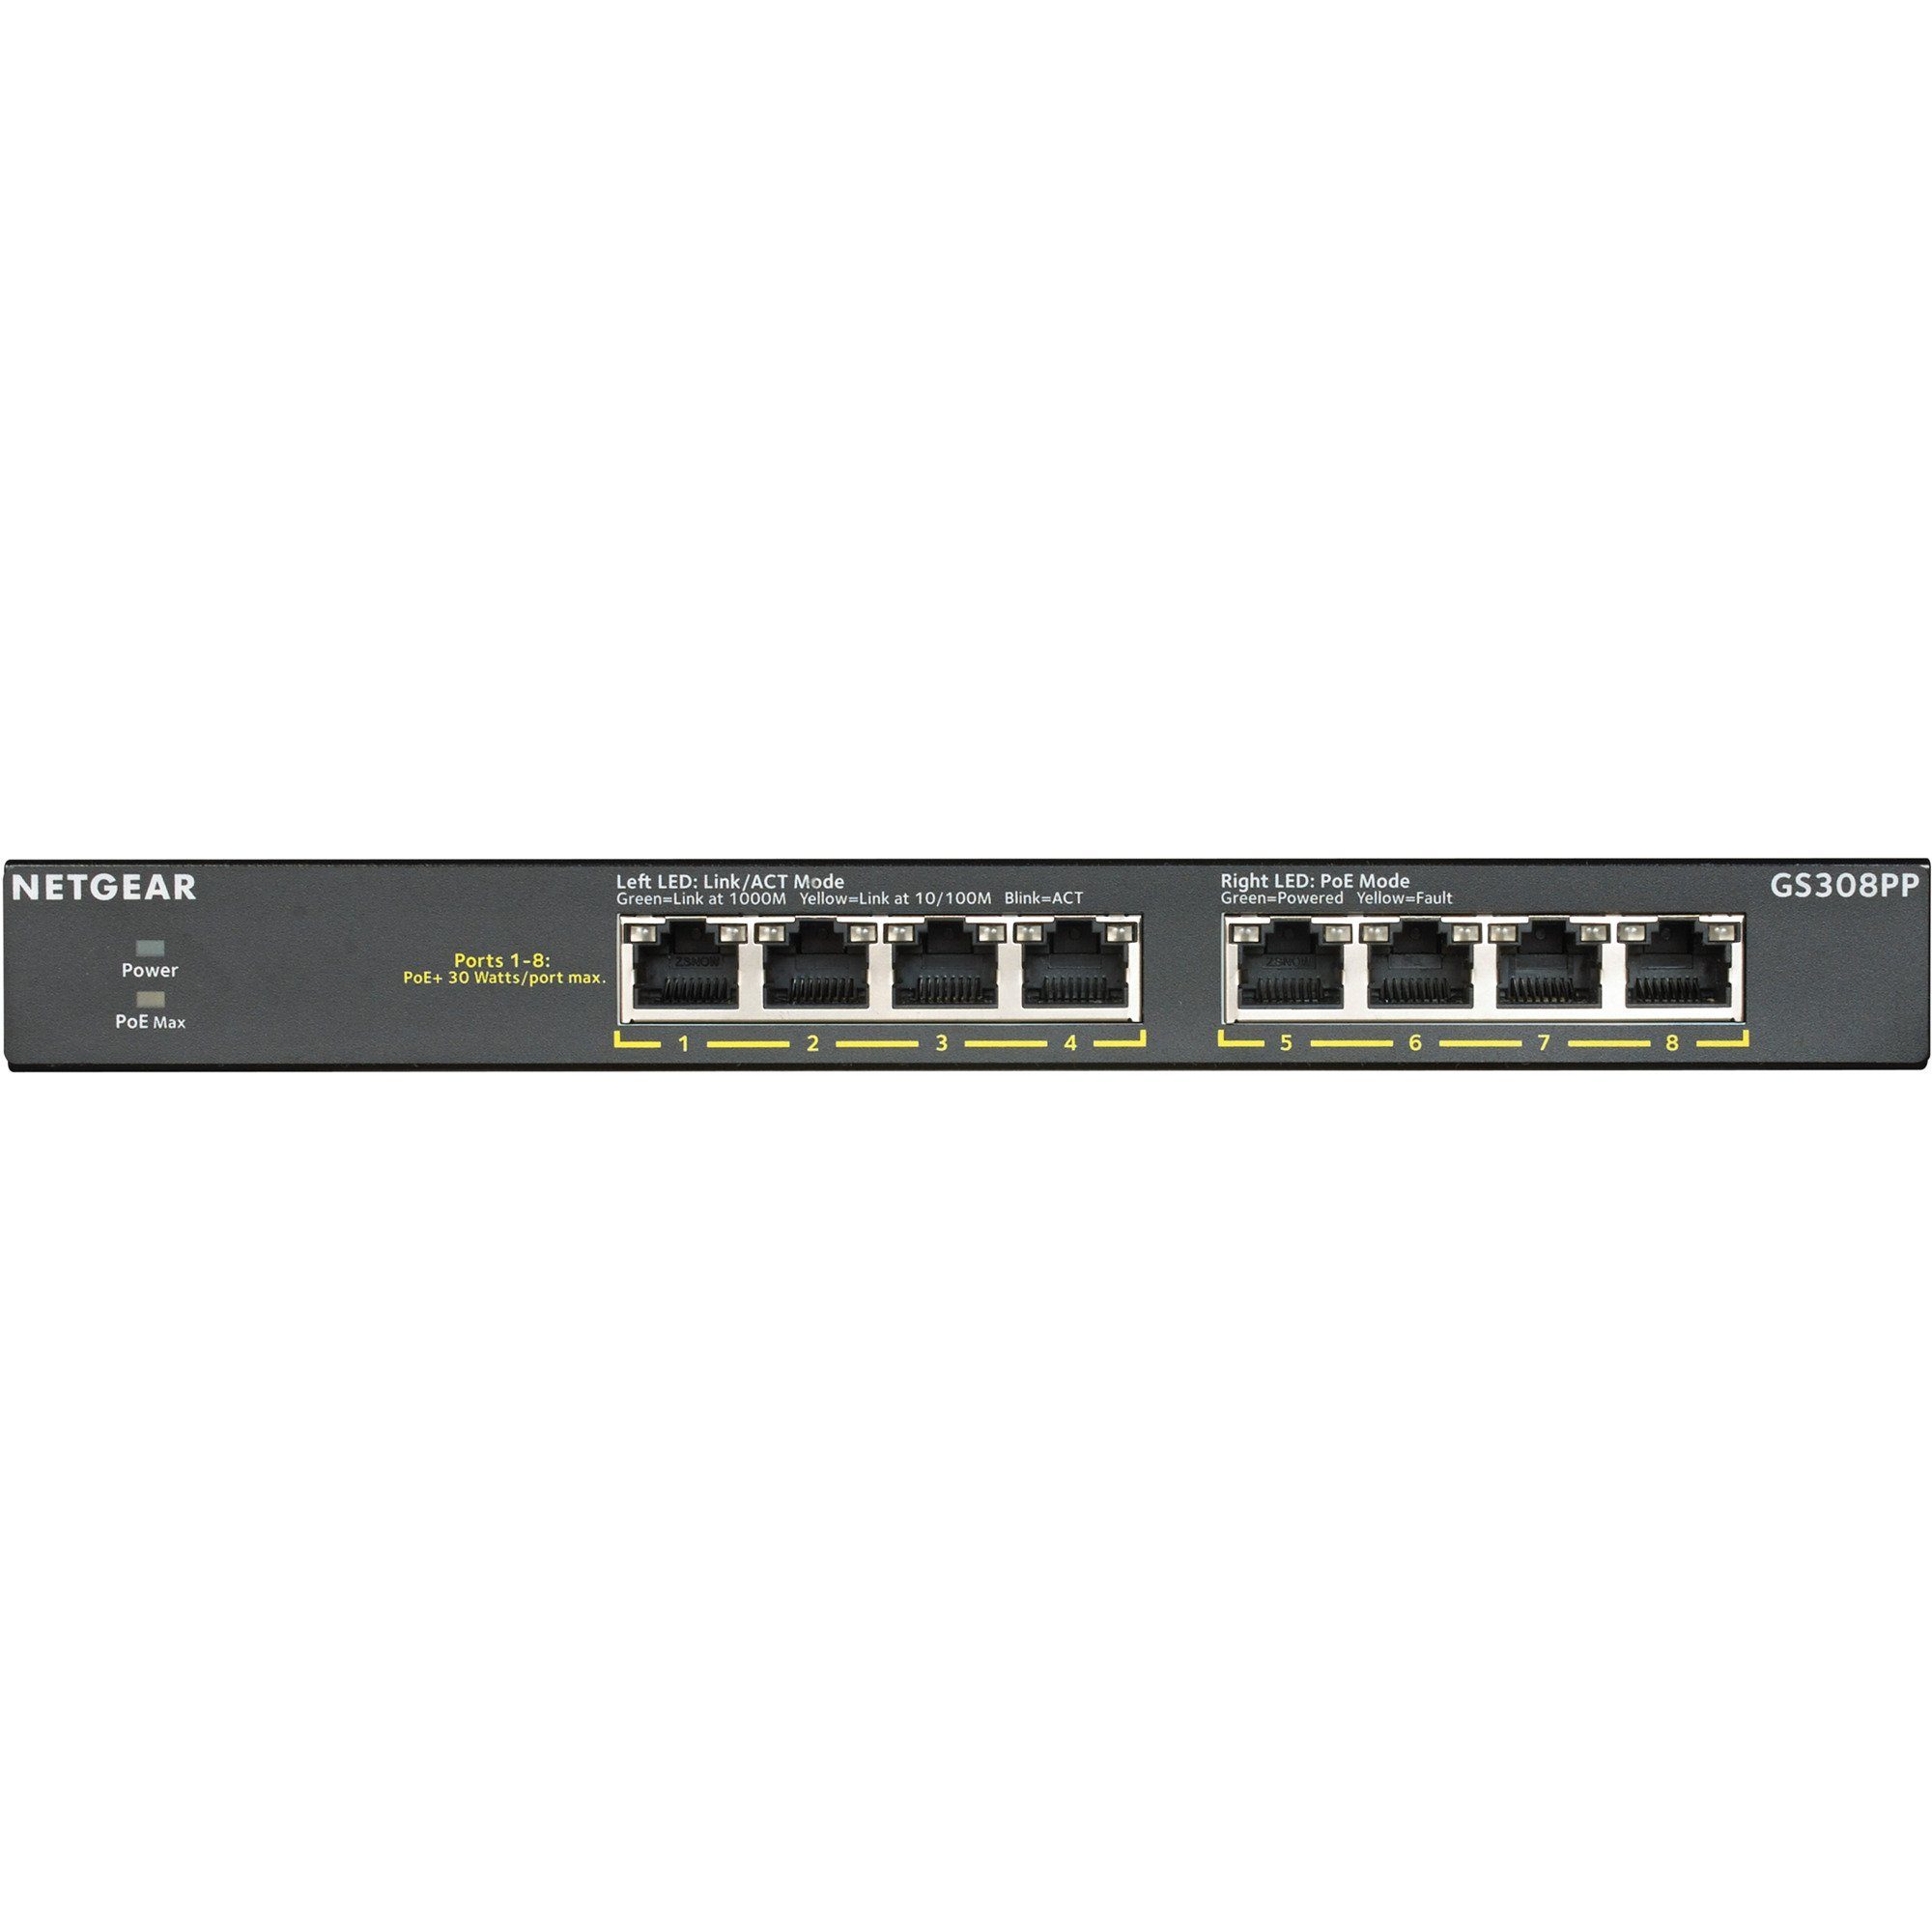 Switch NETGEAR Netgear Netzwerk-Switch GS308PP,